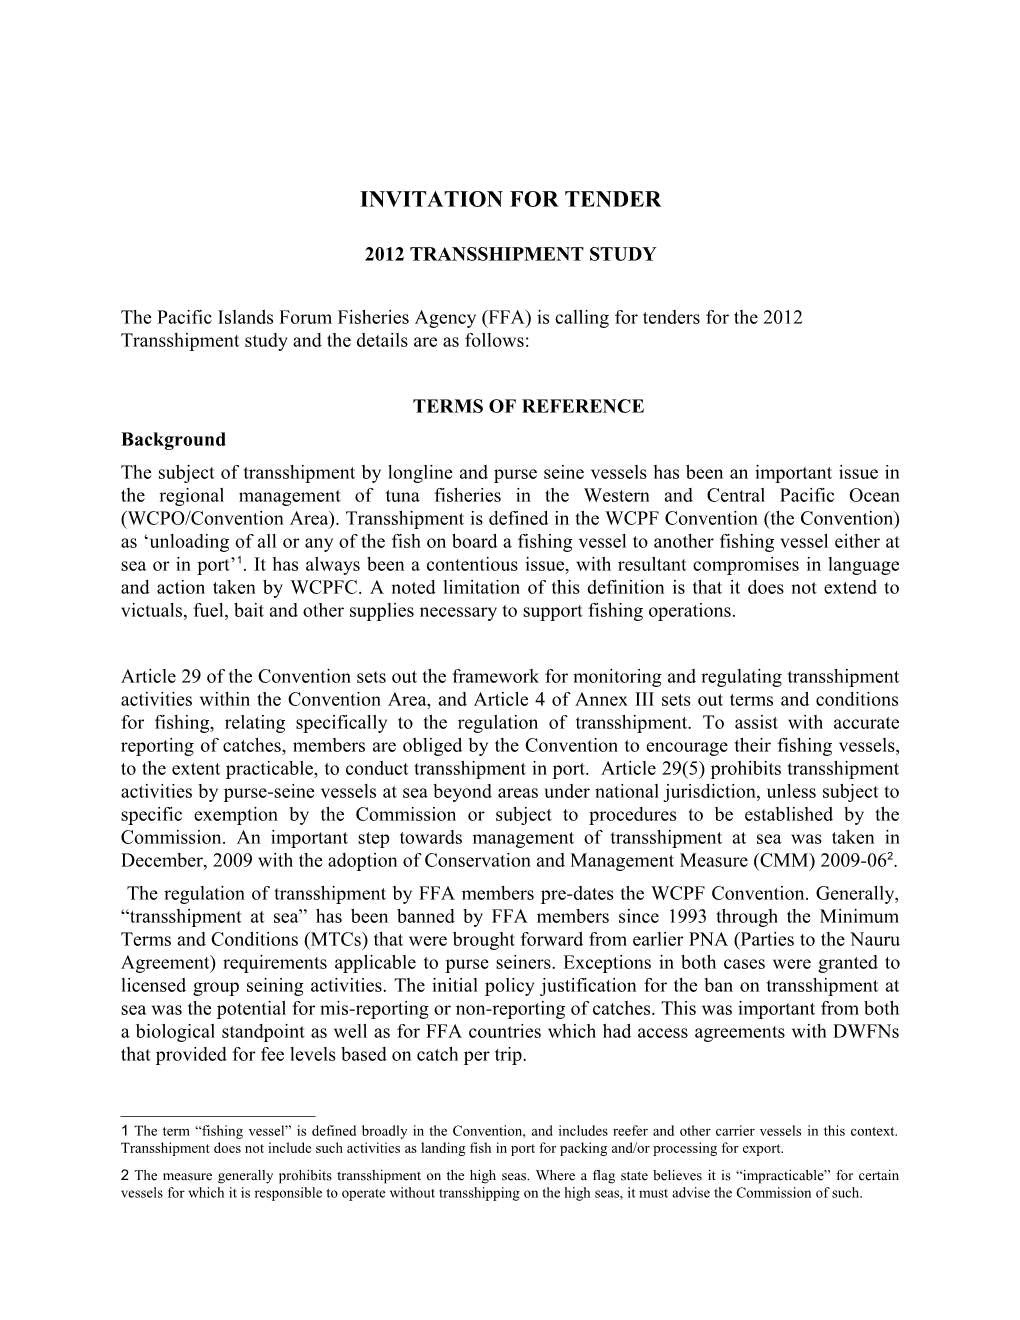 2012 Transshipment Study Draft TOR